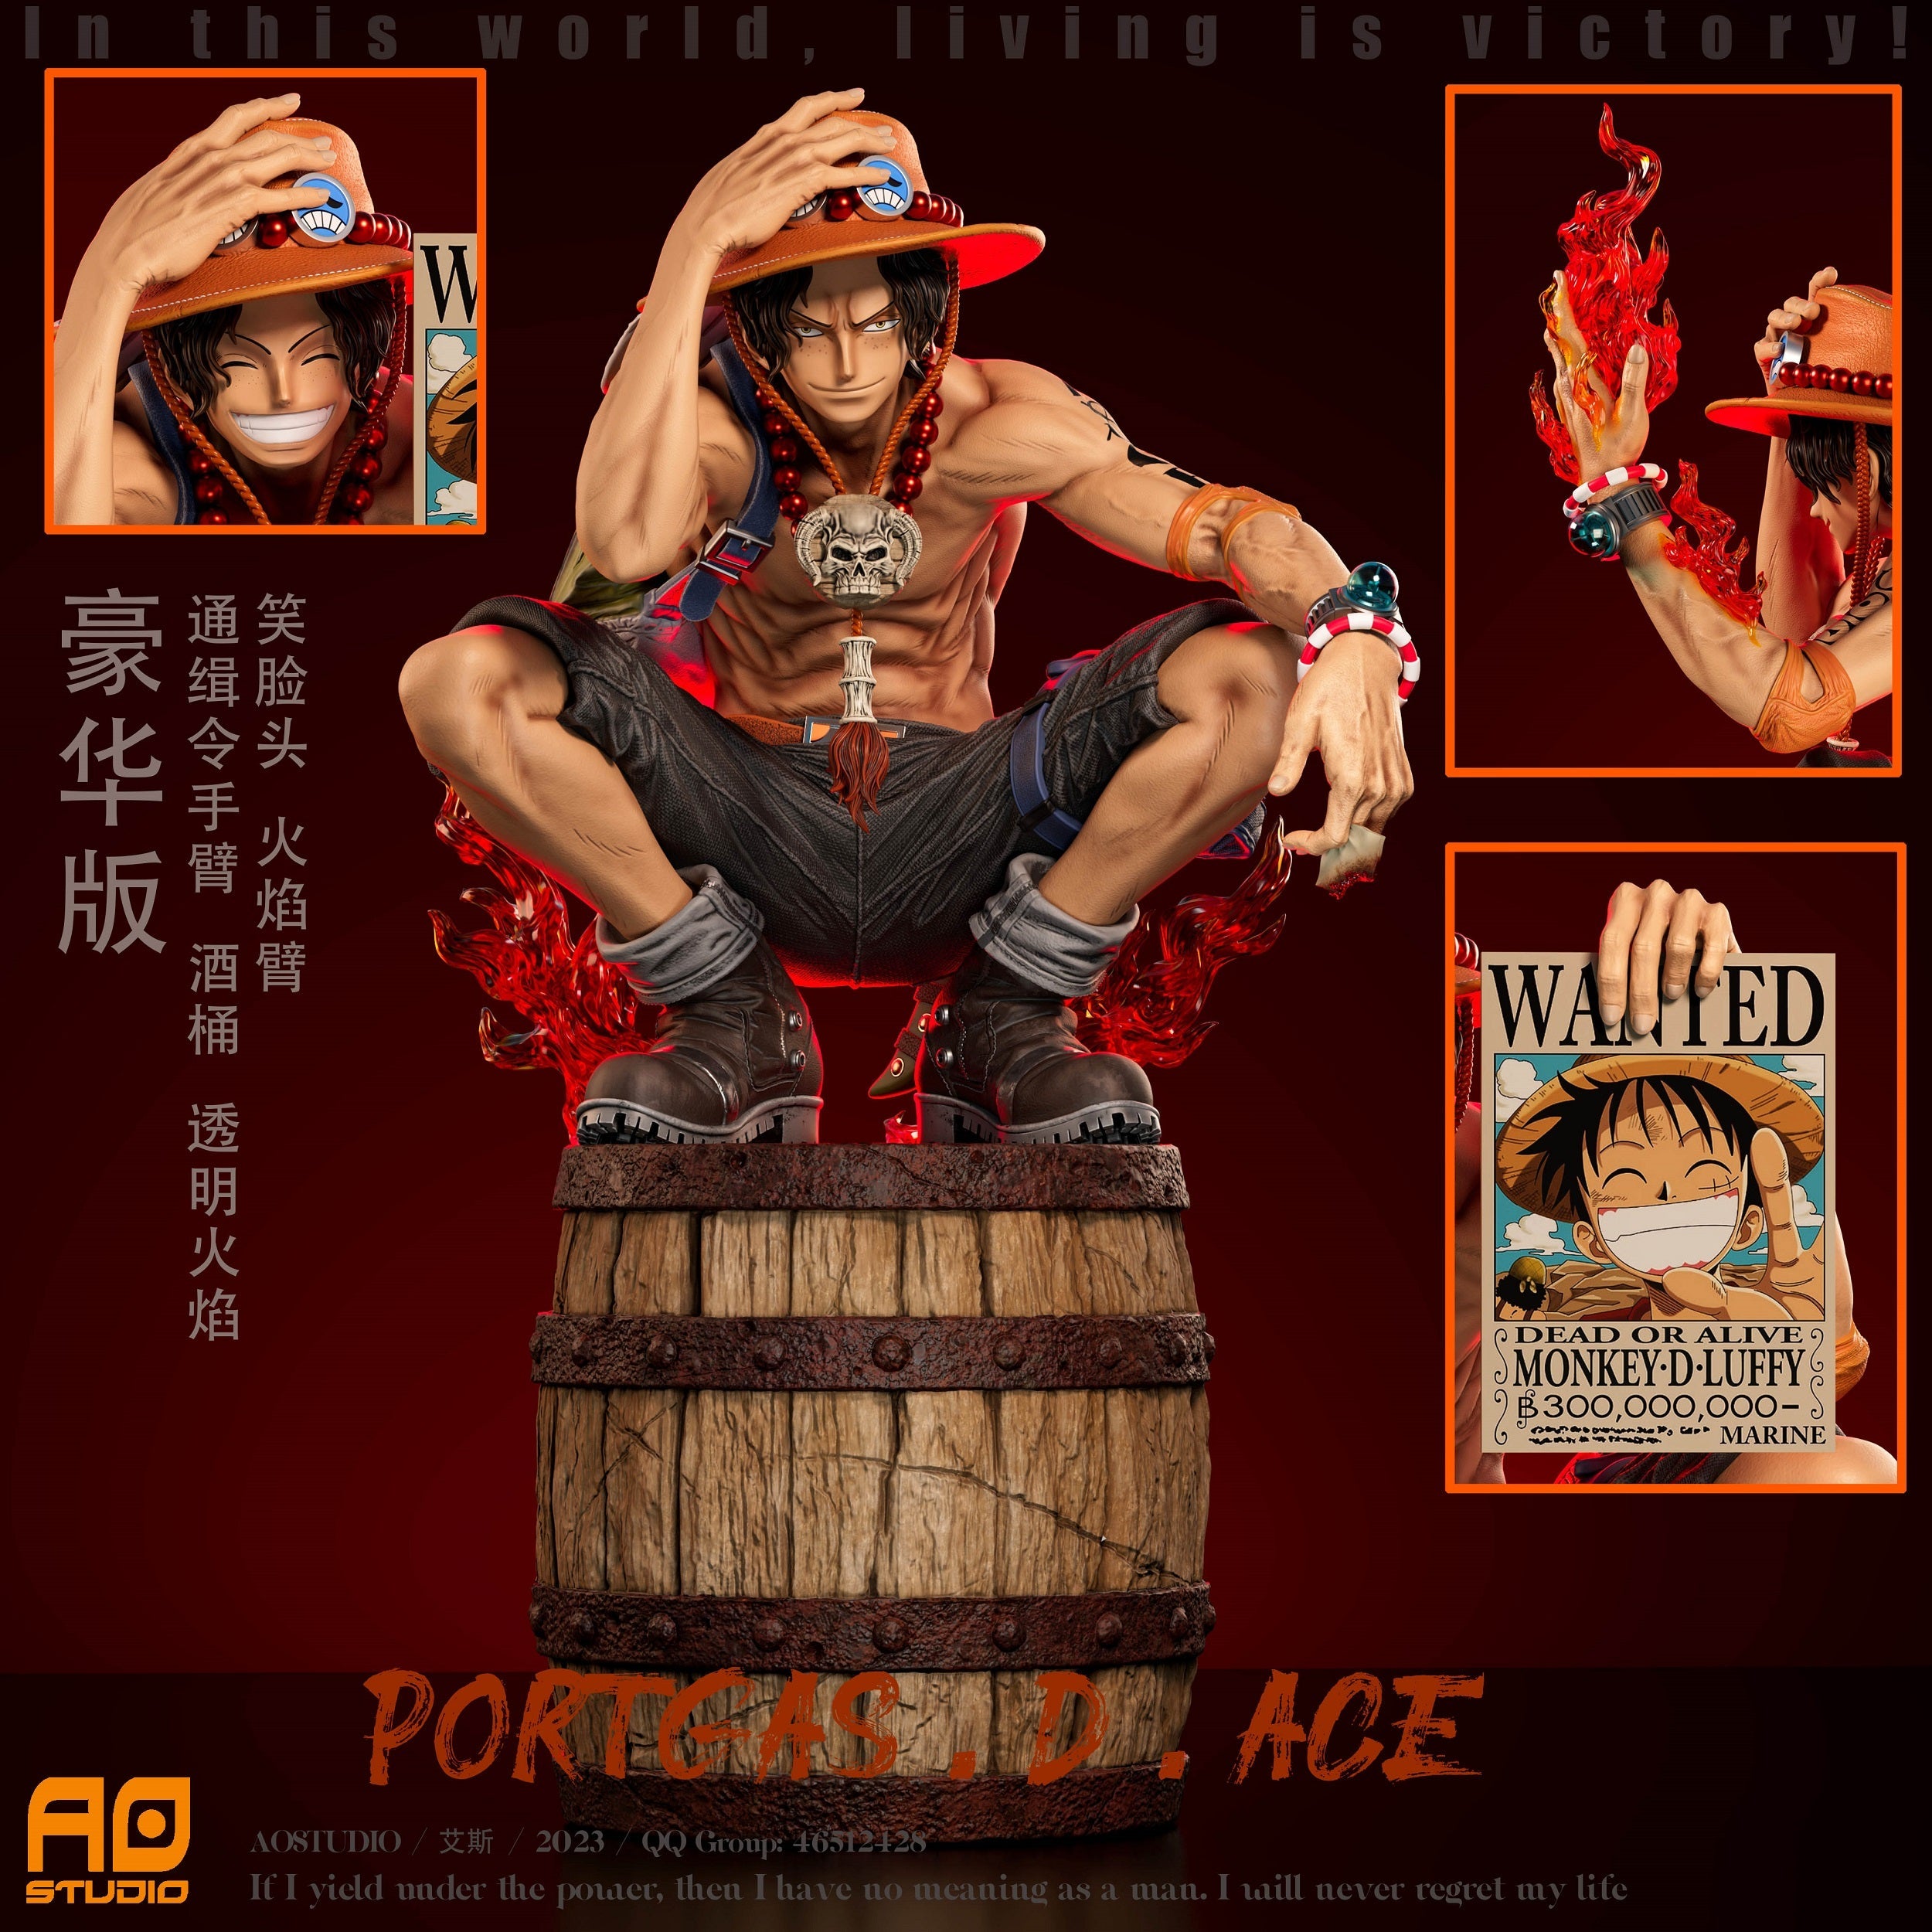 Banpresto One Piece King of Artist Portgas D. Ace Figure (Ver. A)